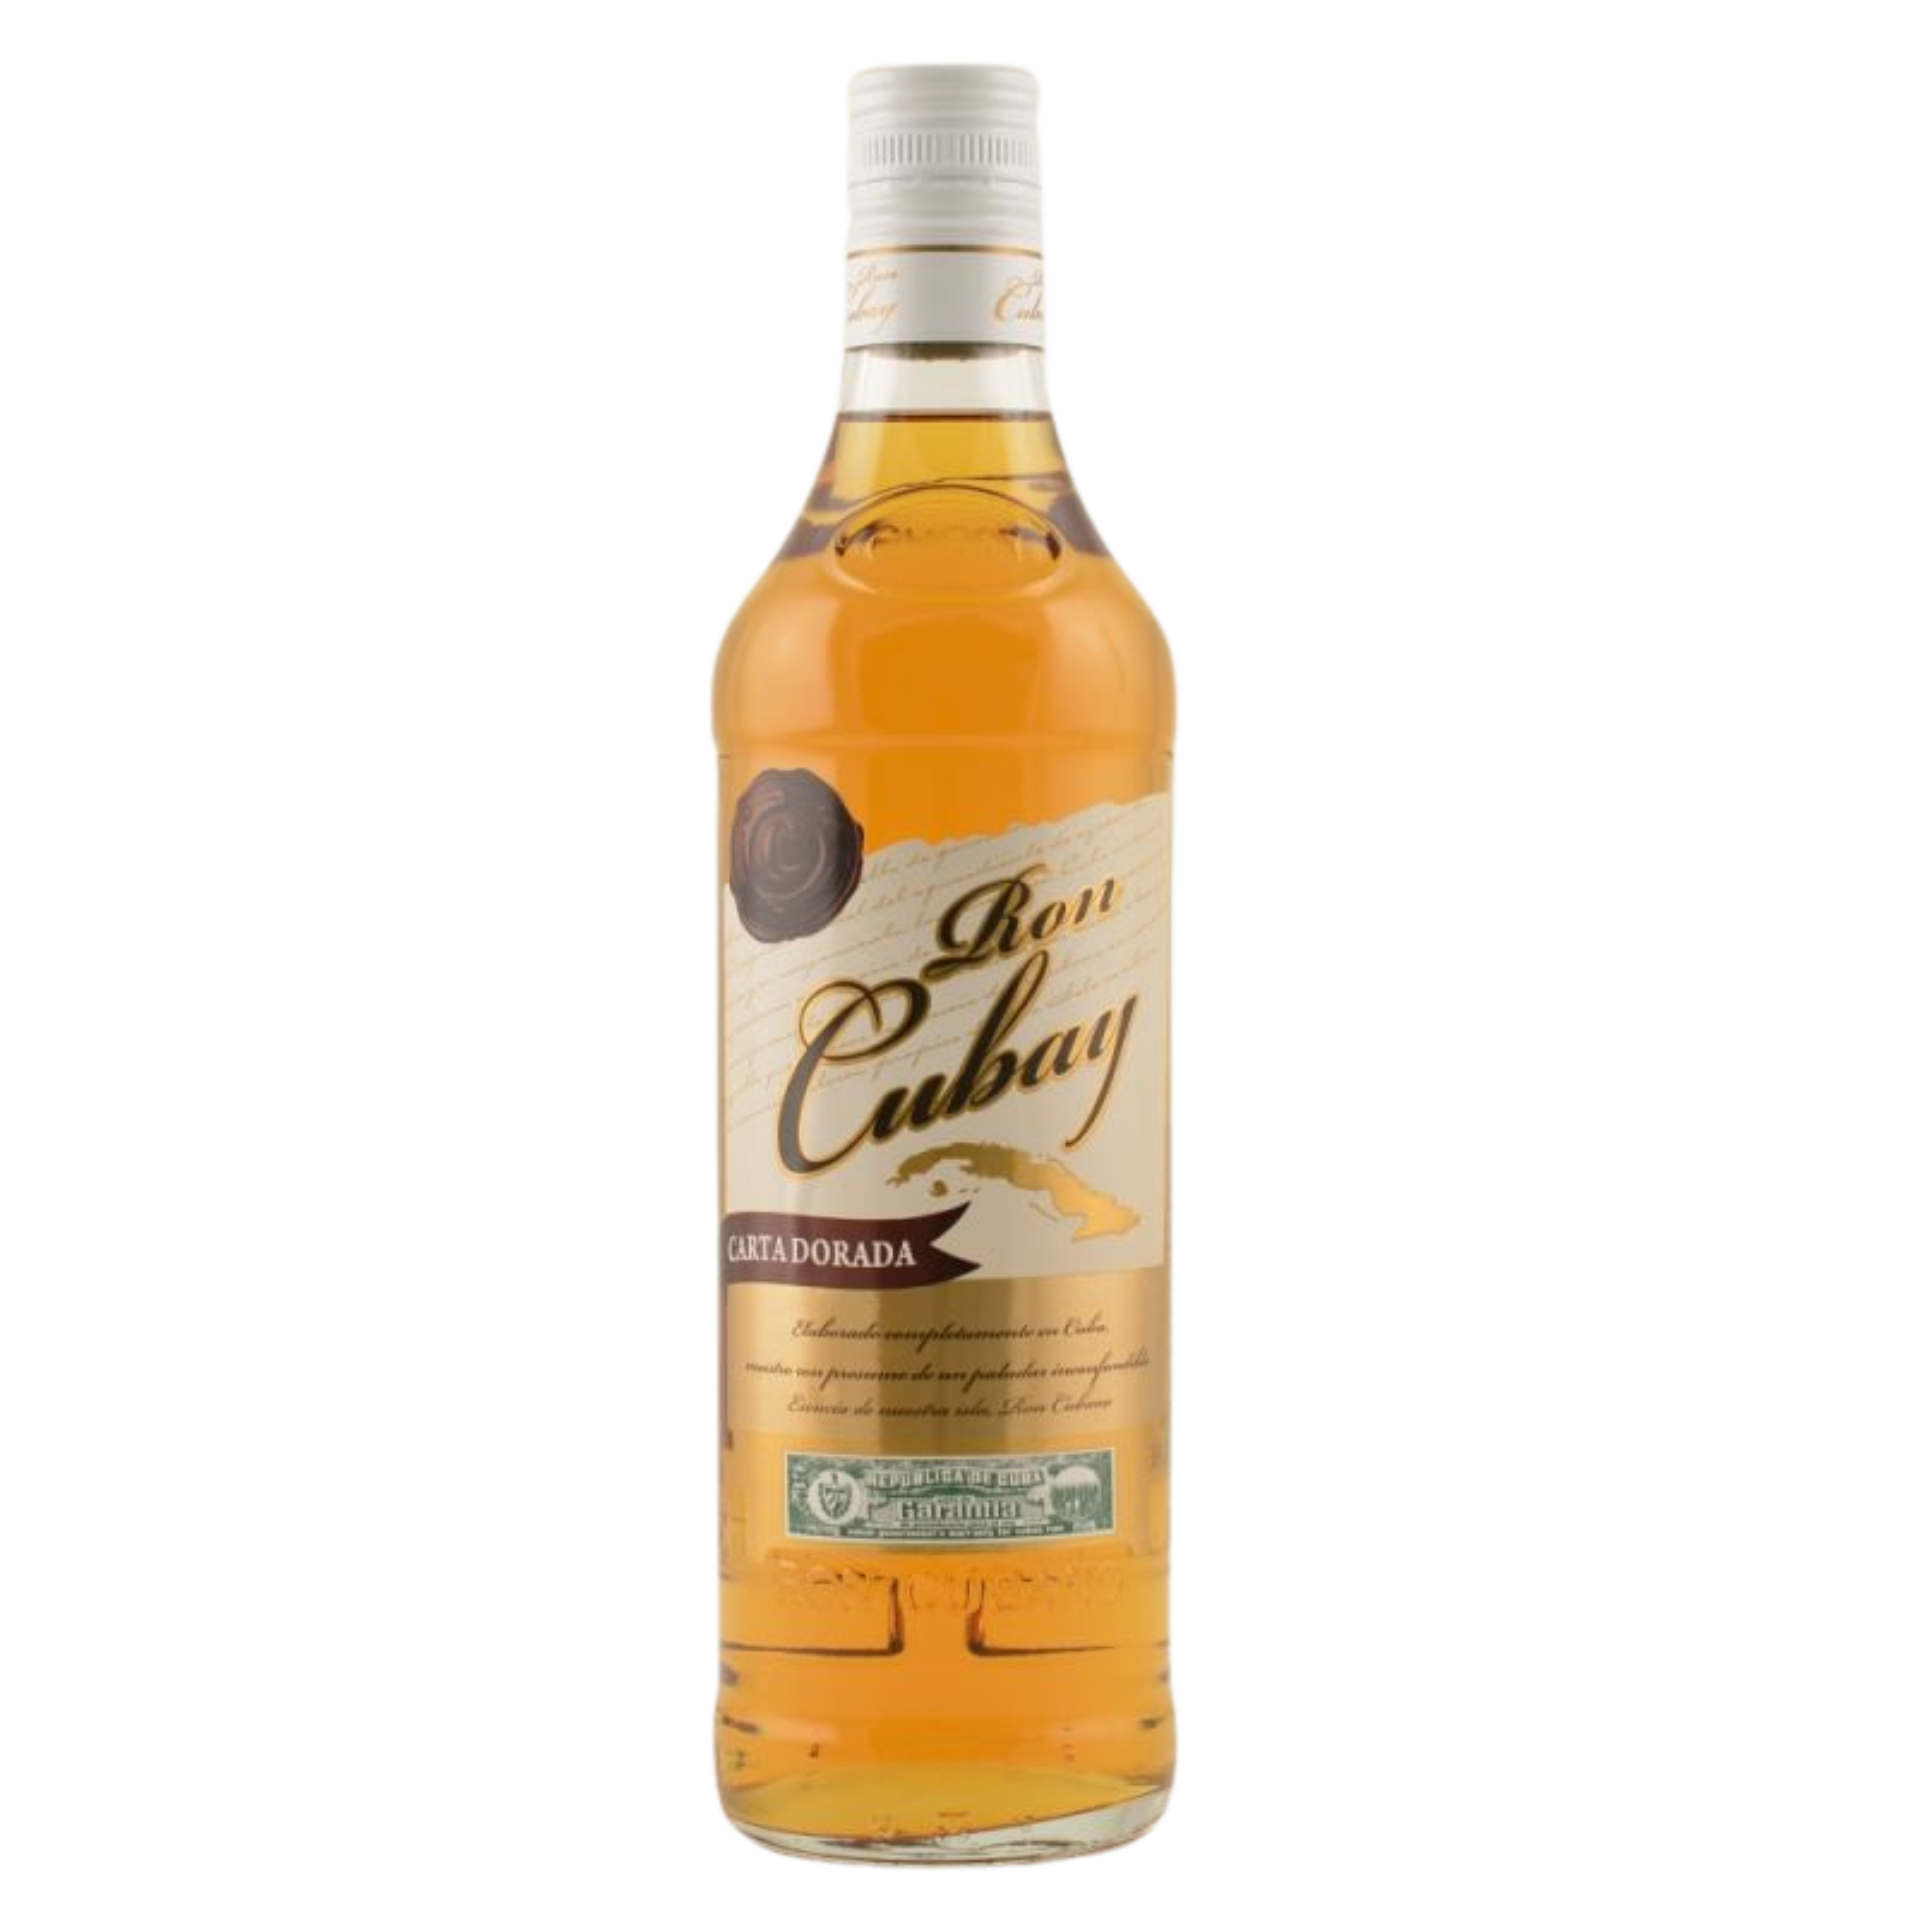 Ron Cubay Carta Dorada 4 Jahre Rum 38% 0,7l